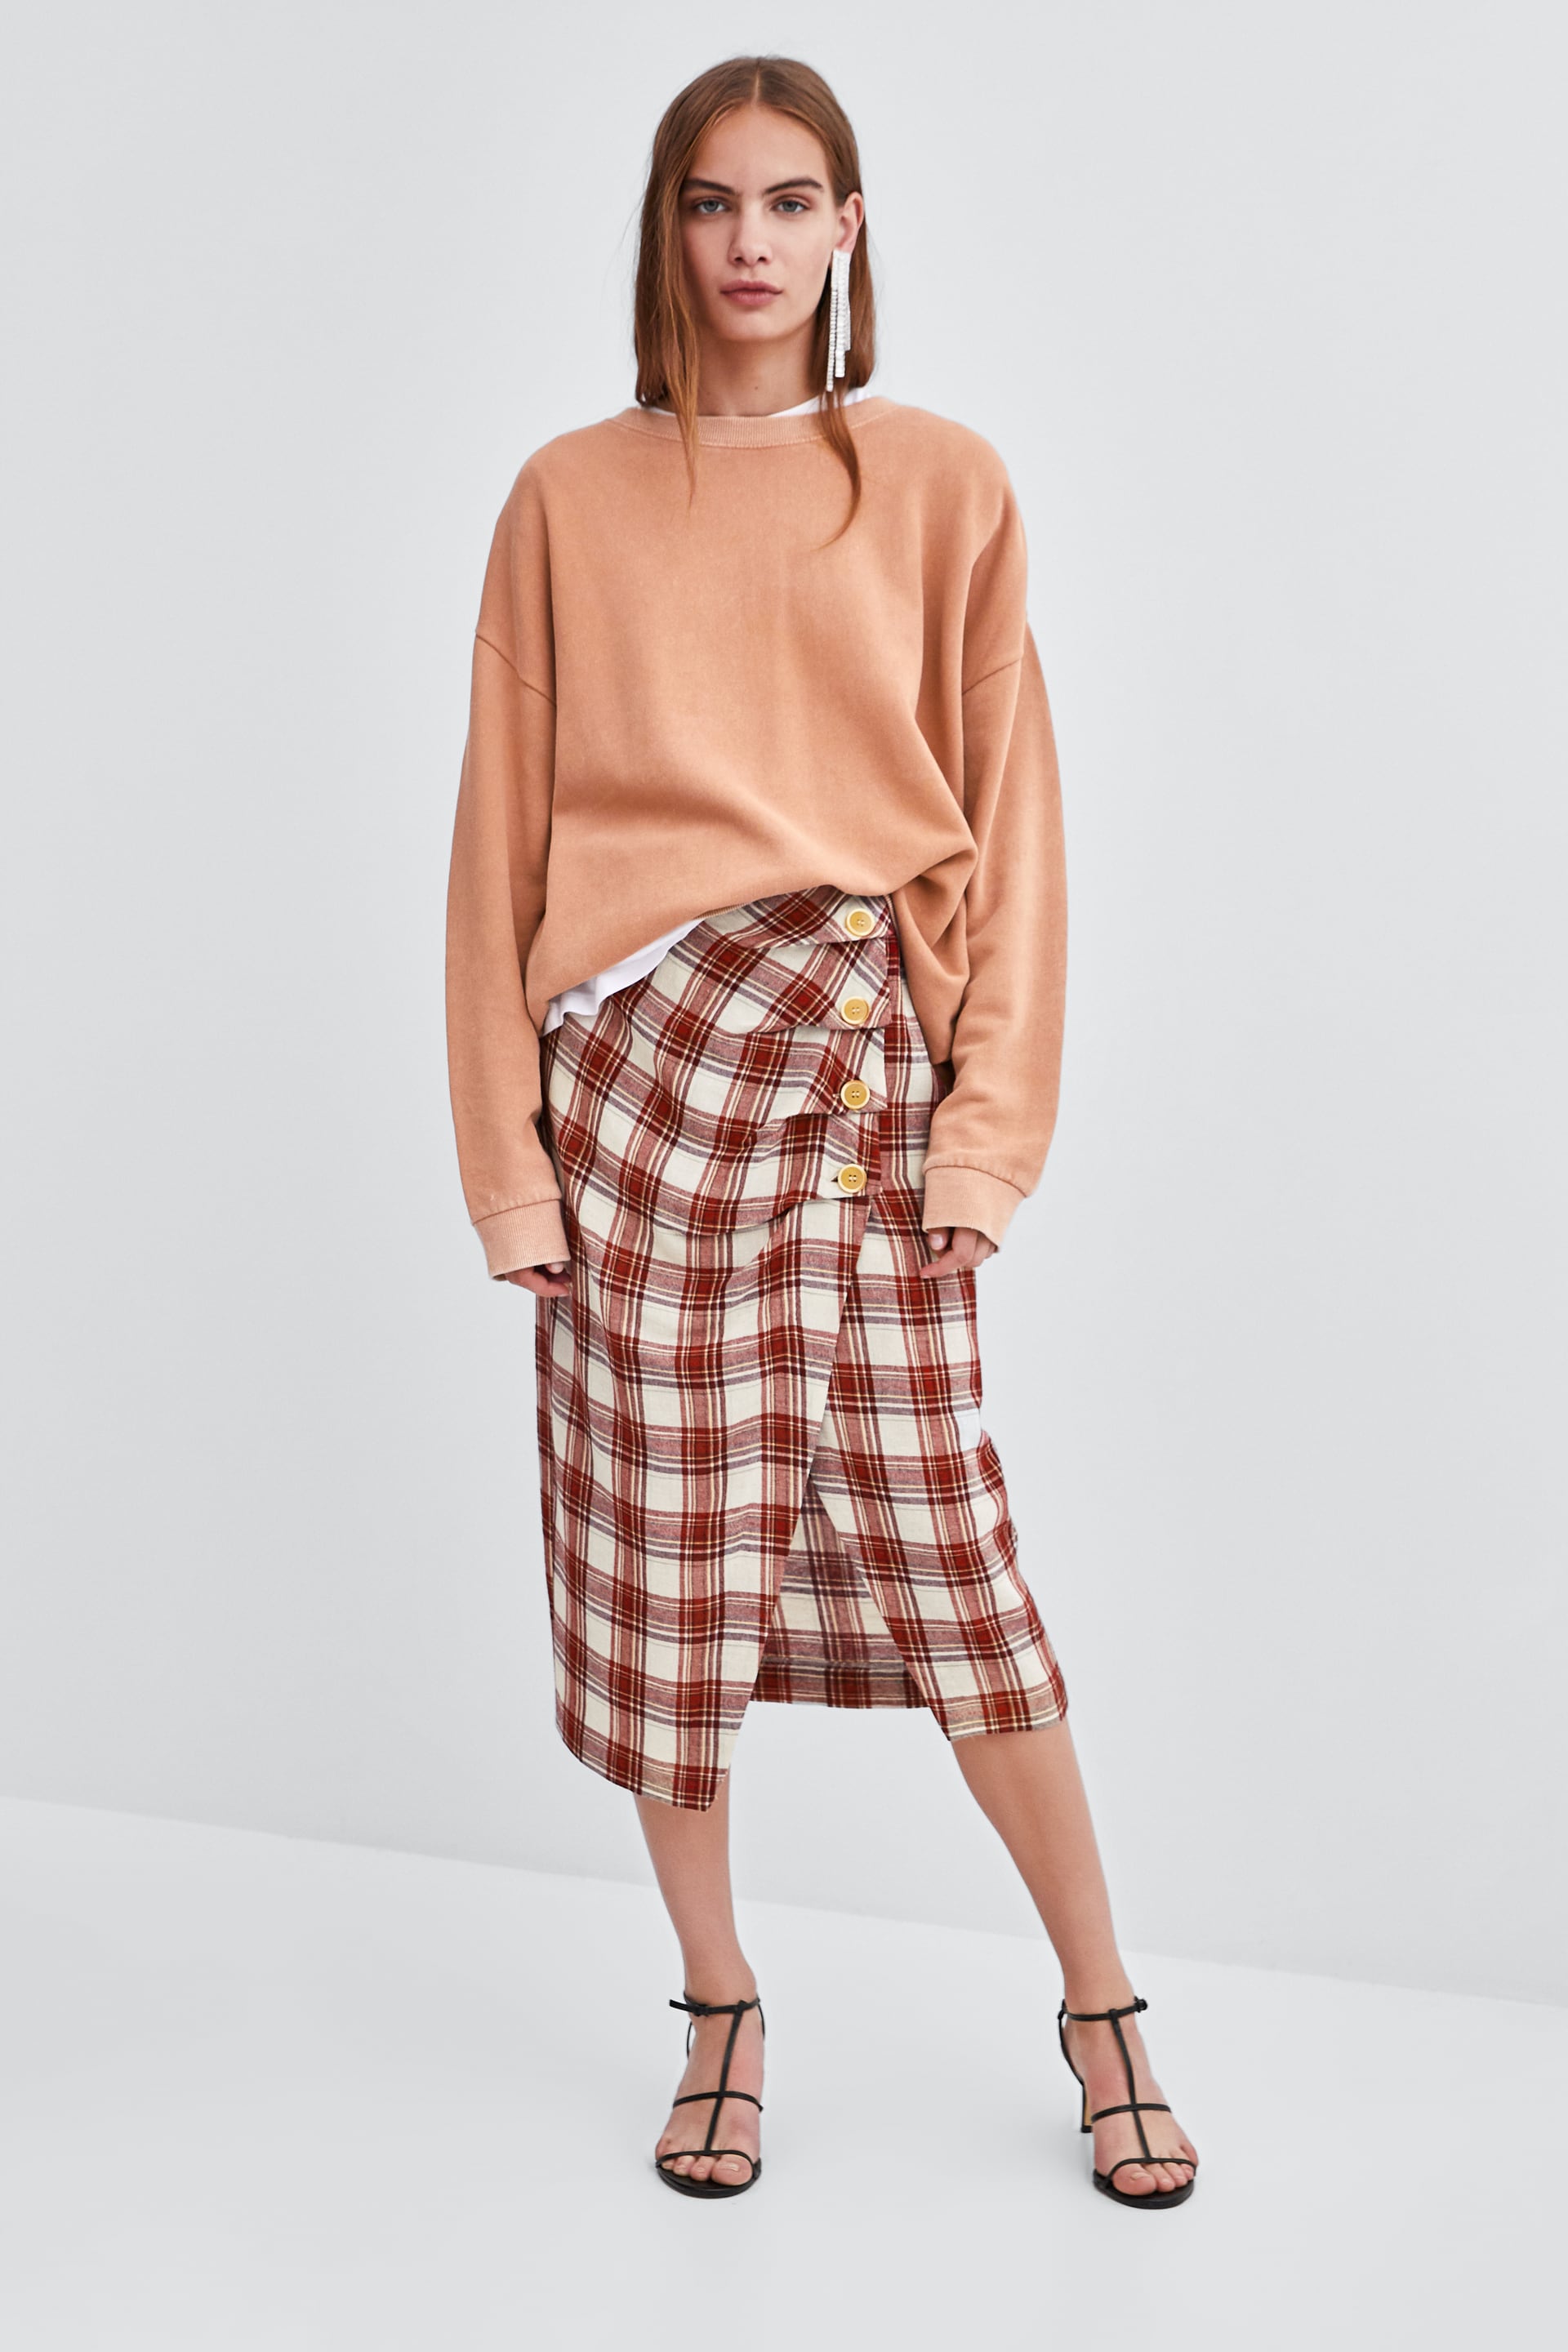    Zara Plaid Midi Skirt     – $39.90 